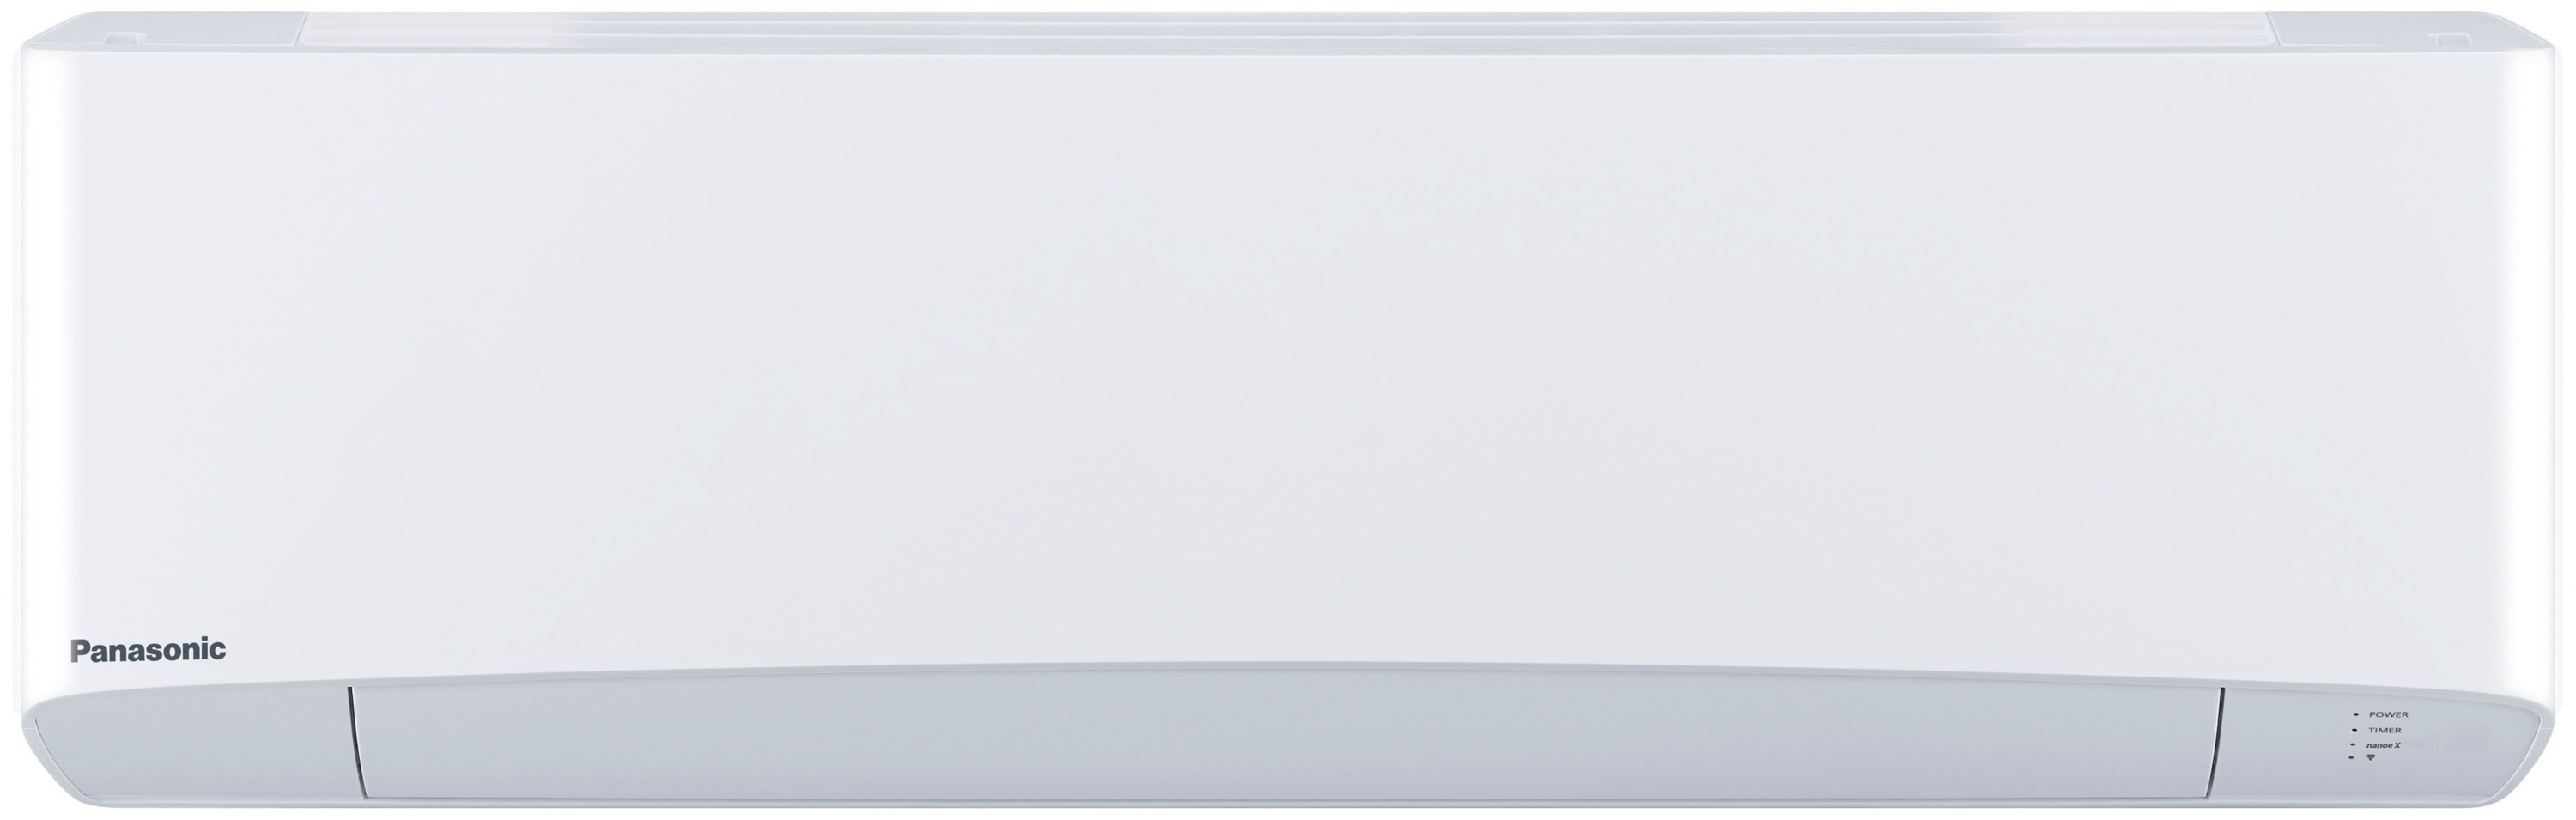 Кондиционер сплит-система Panasonic Flagship White CS/CU-Z71TKEW цена 99999 грн - фотография 2